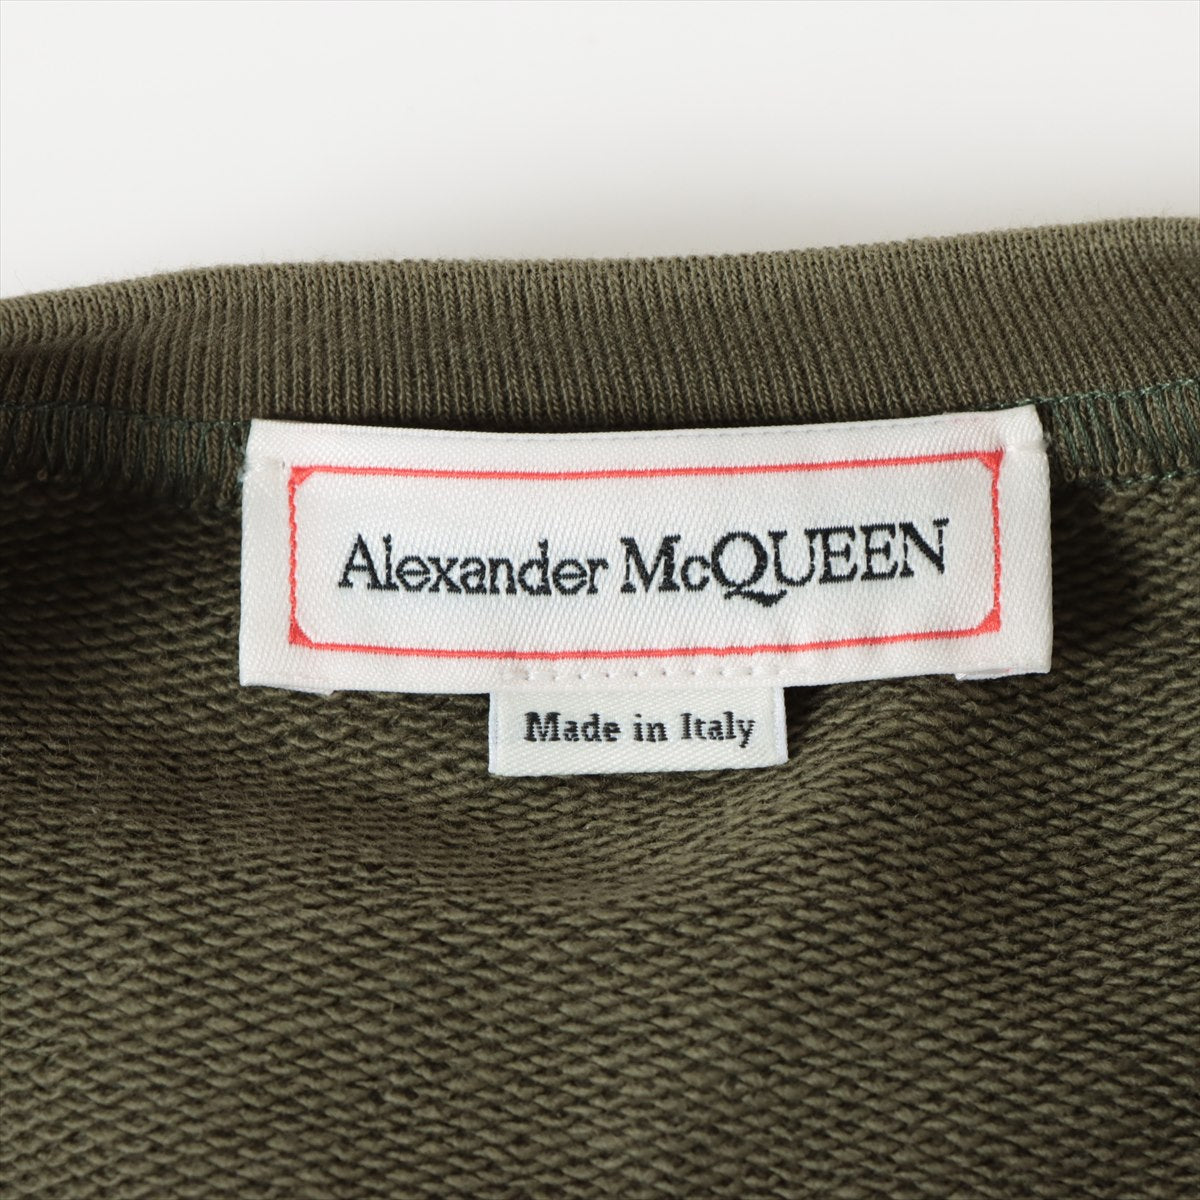 Alexander McQueen Cotton Basic knitted fabric L Men's Khaki  759153